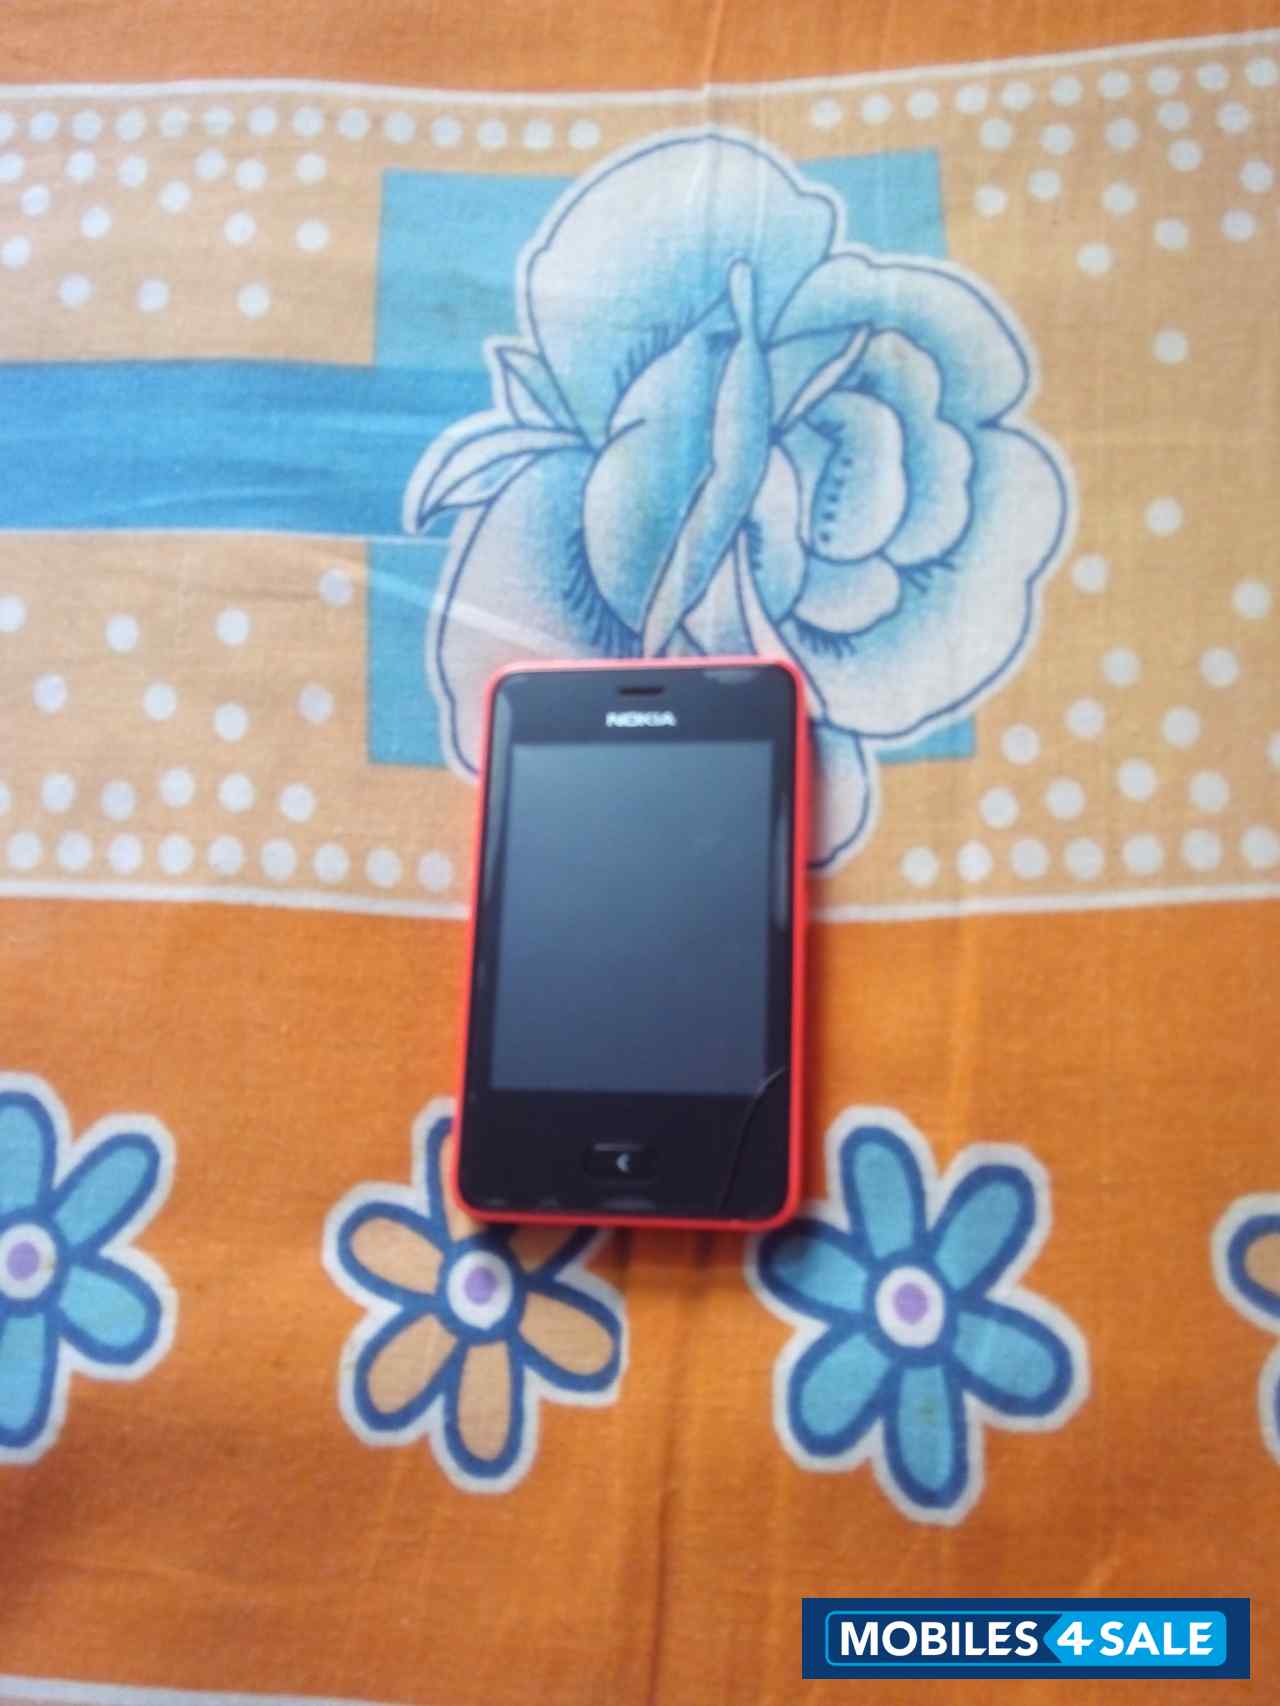 Red Nokia Asha 501